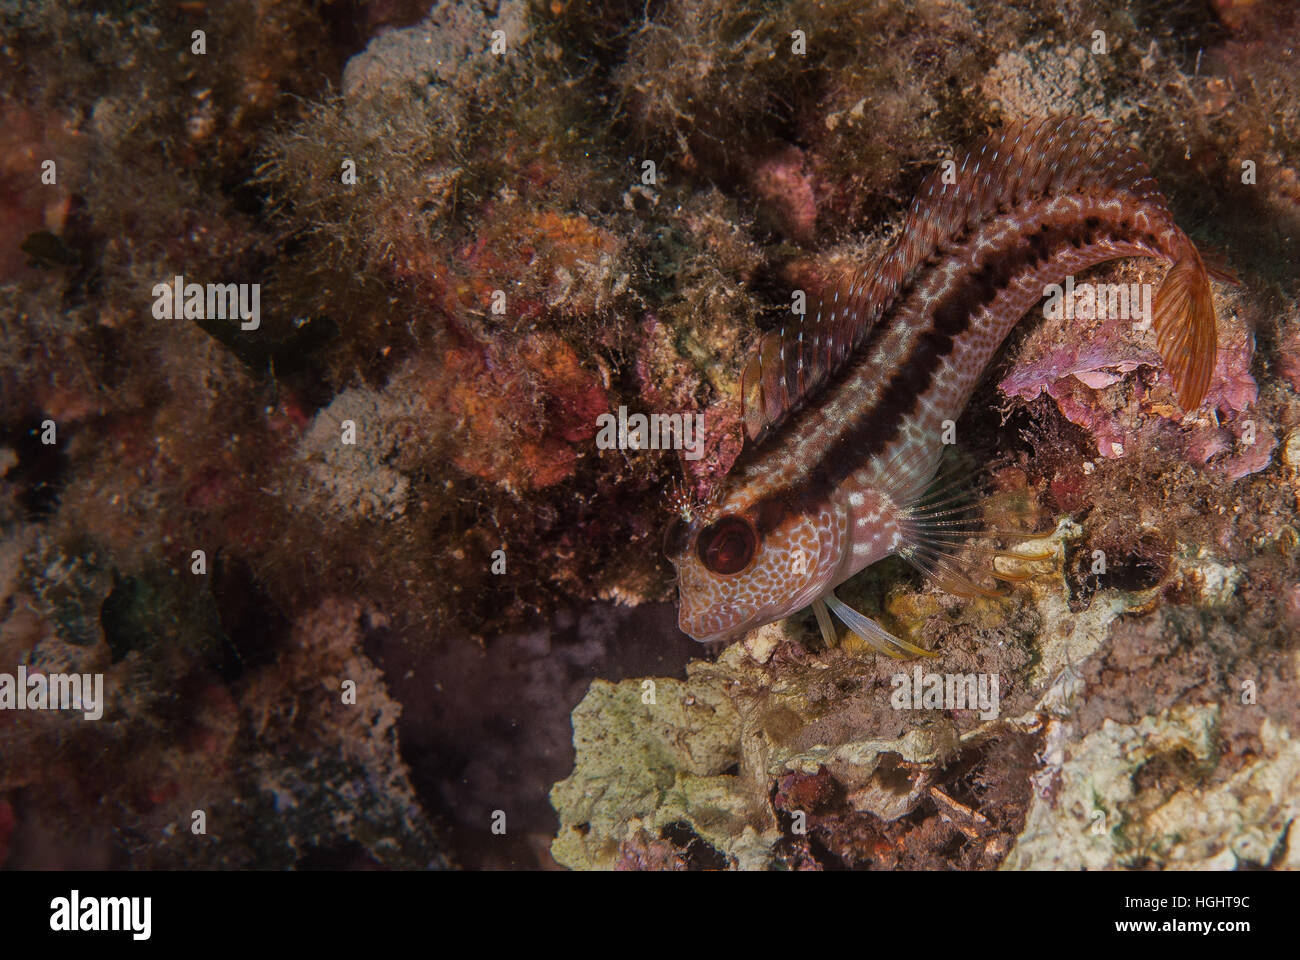 Longstriped blenny (Parablennius rouxi), Gobiidae, Tor Paterno marine protected area, Lazio, Italy, Mediterranean Sea. Stock Photo